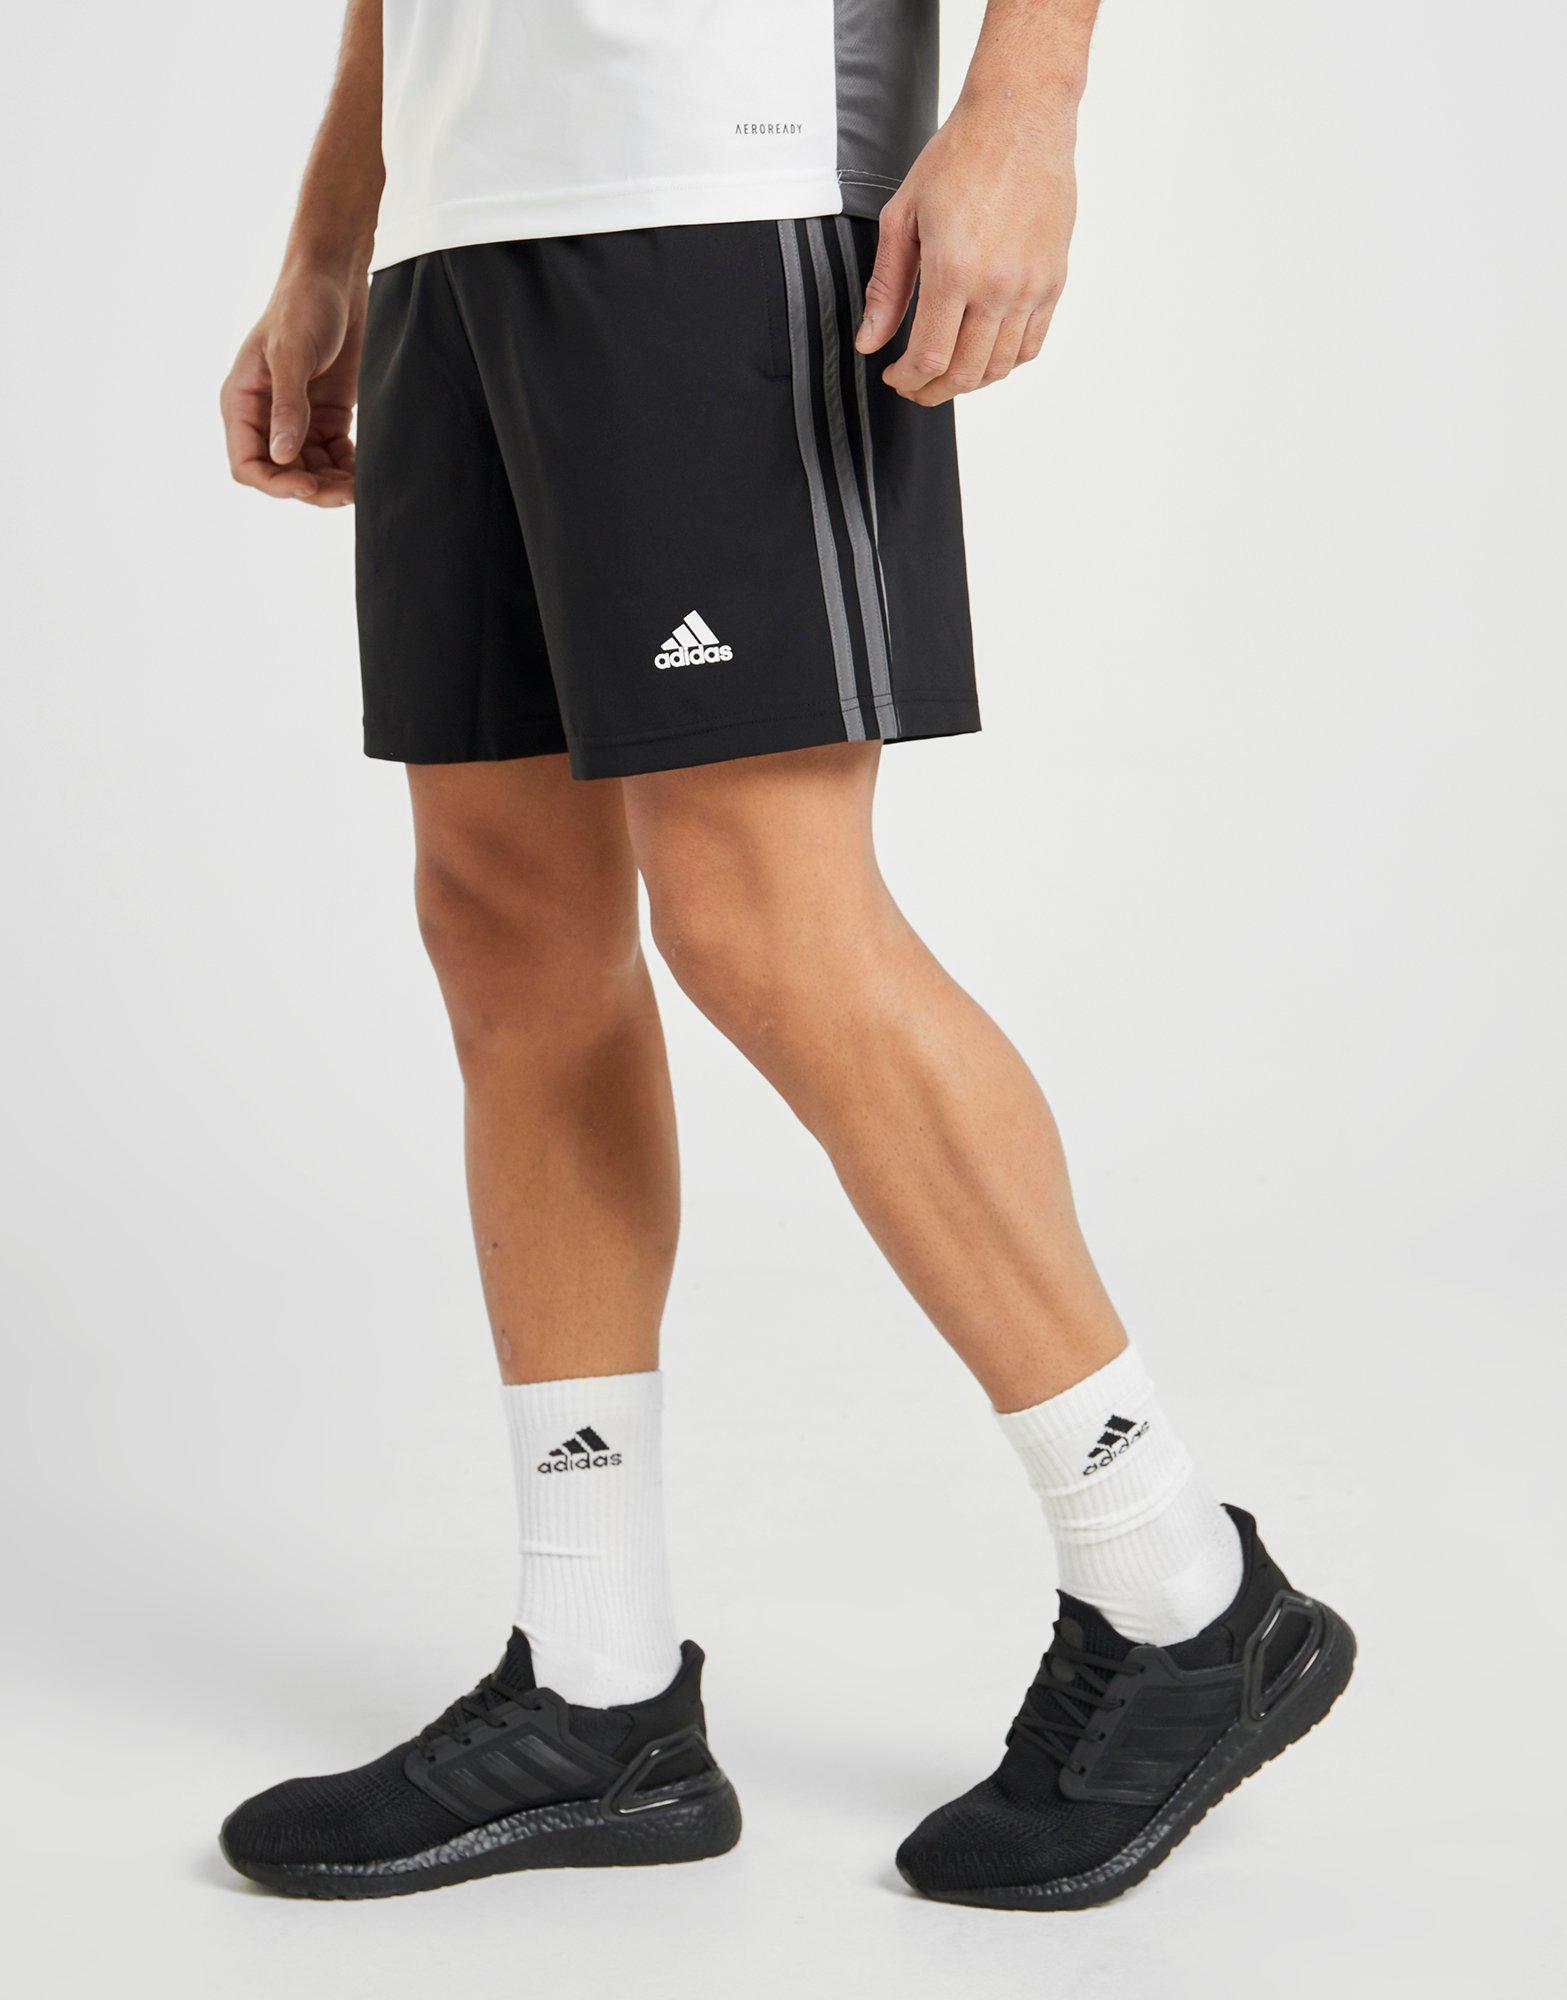 adidas Match Woven Football Shorts